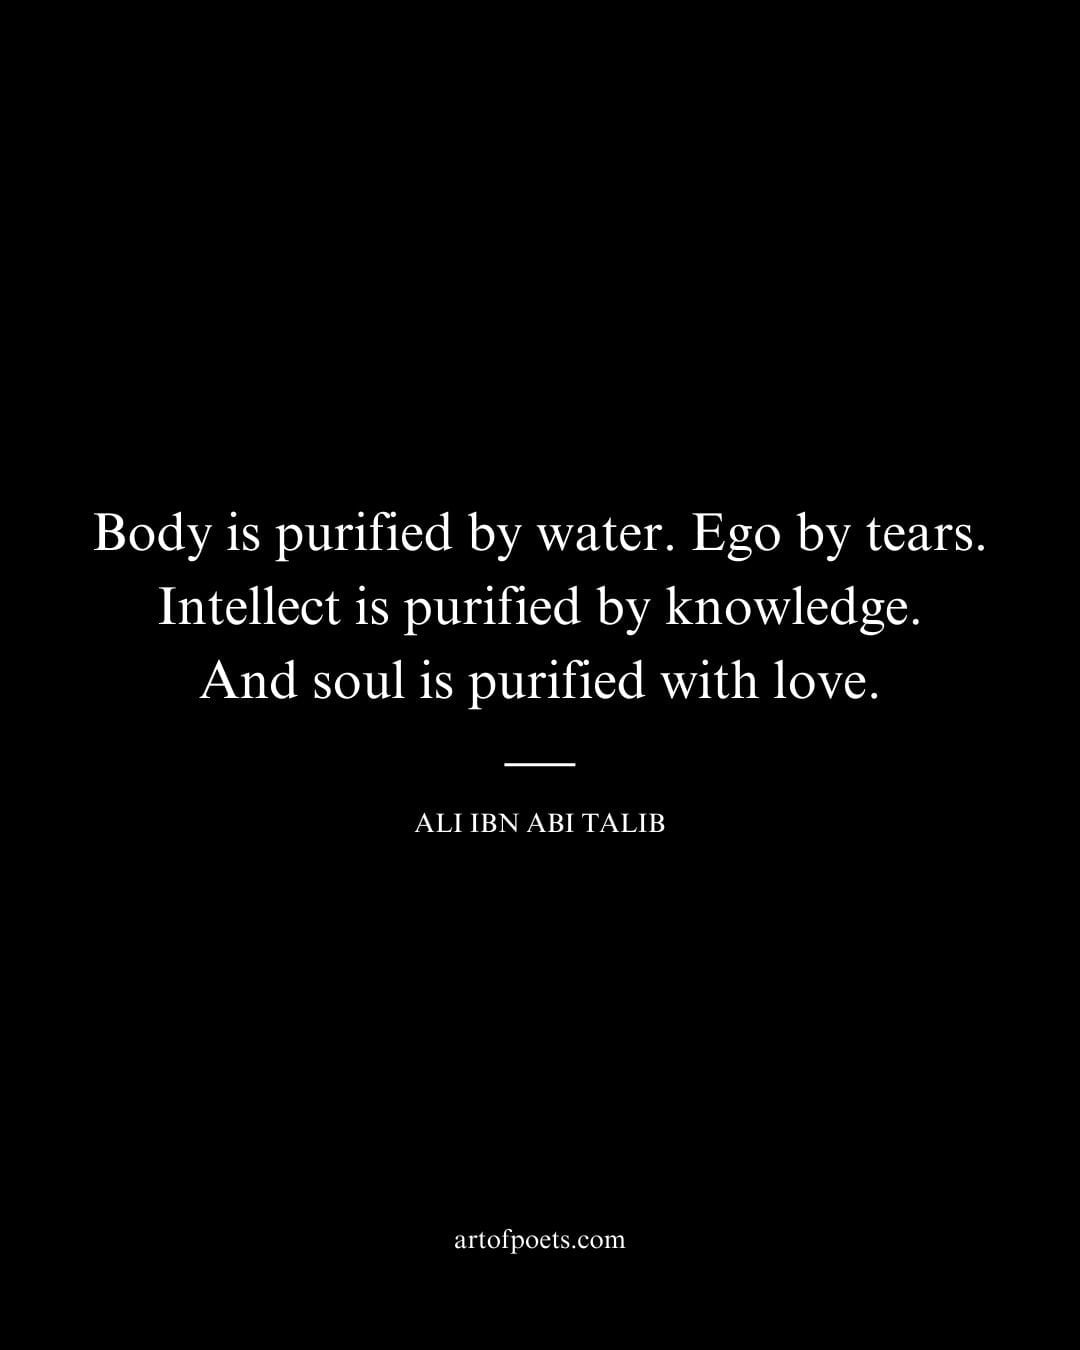 Body is purified by water. Ego by tears. Intellect is purified by knowledge. And soul is purified with love. Ali ibn Abi Talib